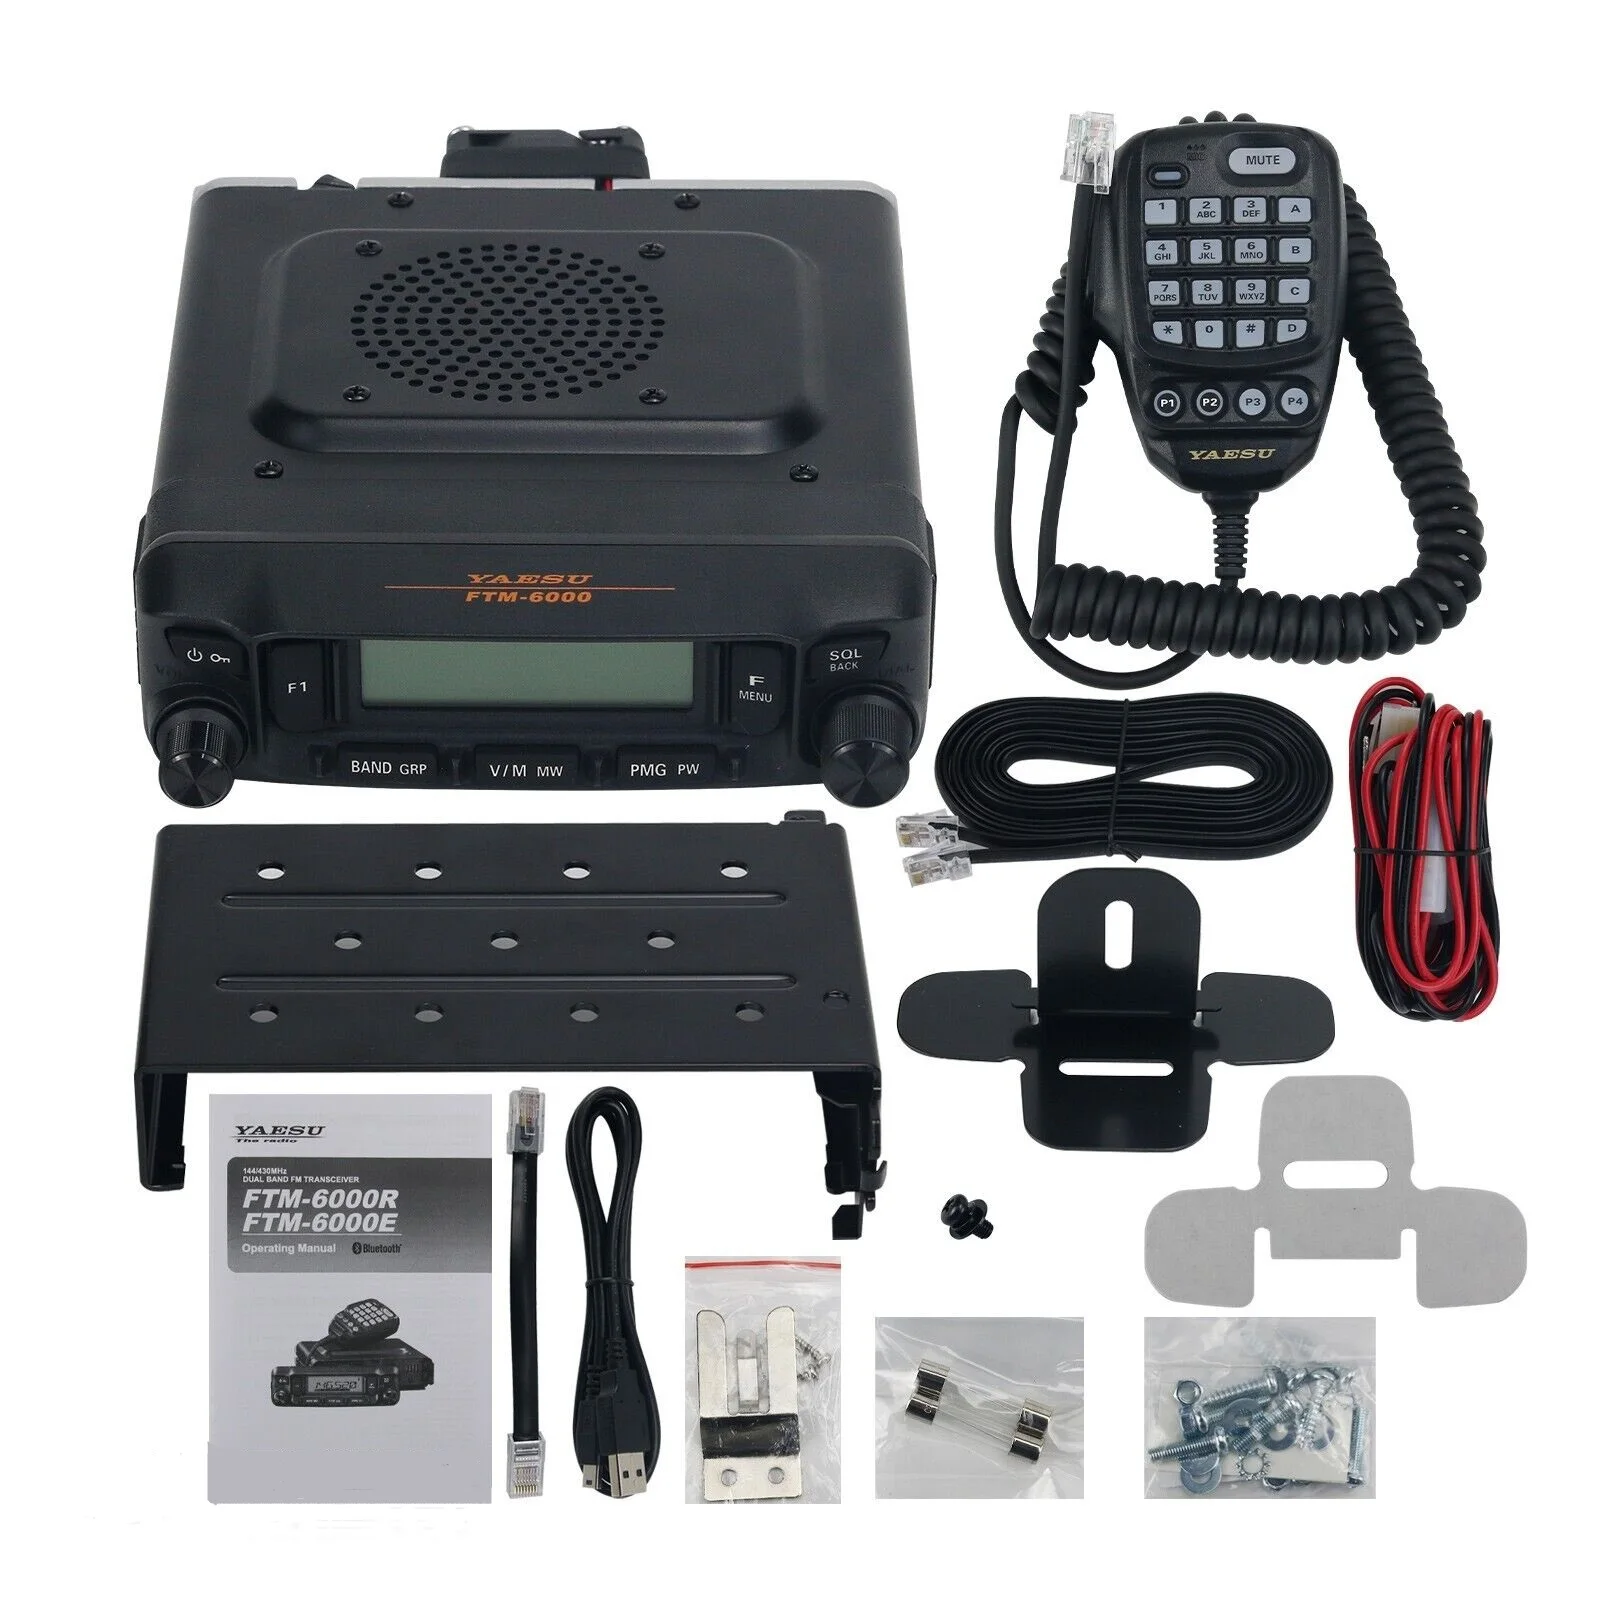 

YAESU FTM-6000R Dual Band Mobile Radio 50W Car VHF UHF Transceiver Multi-channel